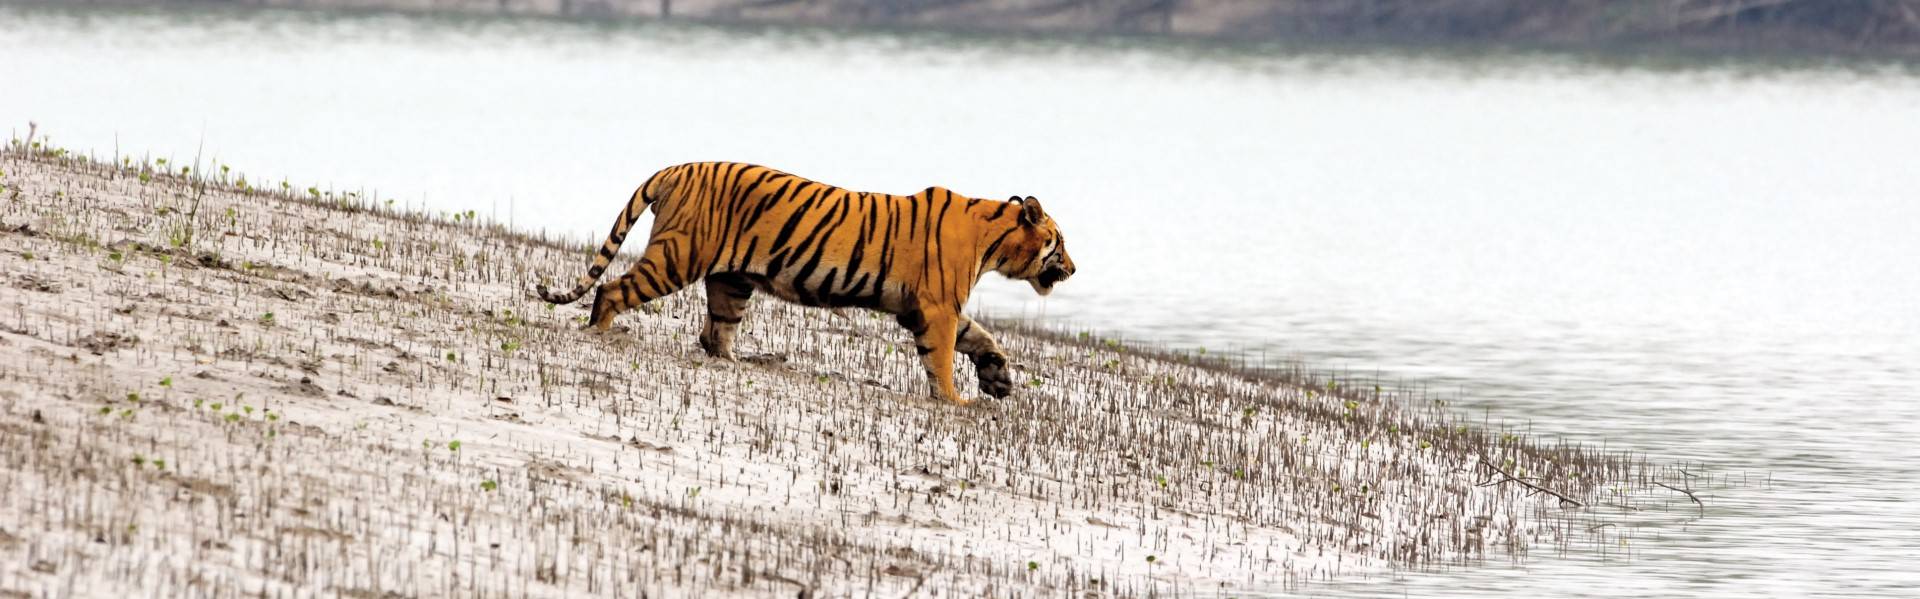 Human overreliance on Sundarbans forest threatens Royal Bengal Tigers